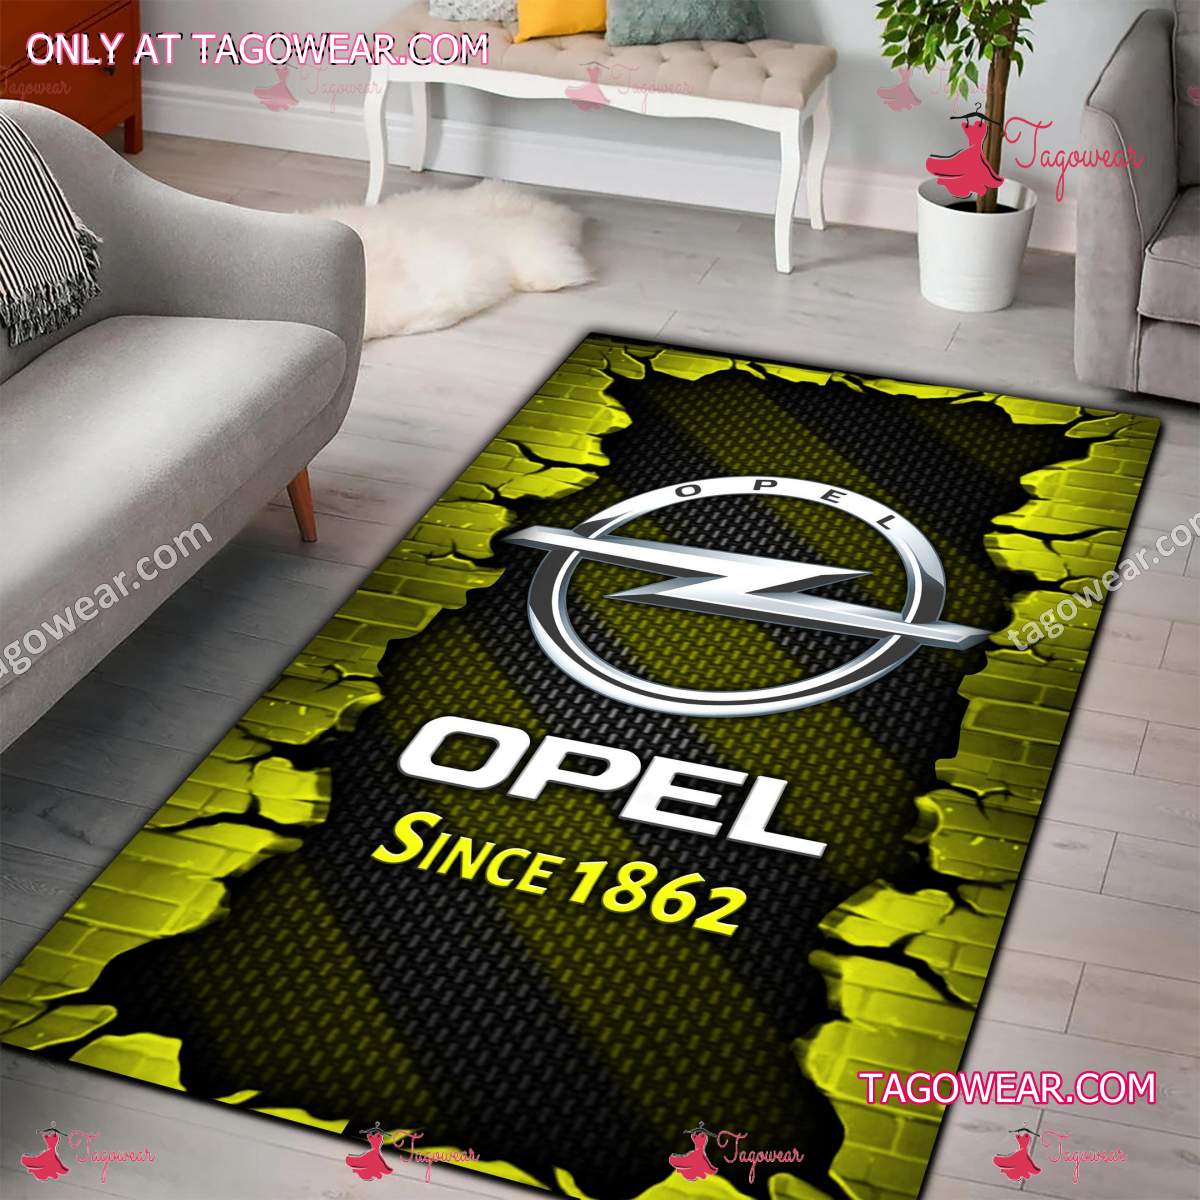 Opel Since 1862 Rug Carpet